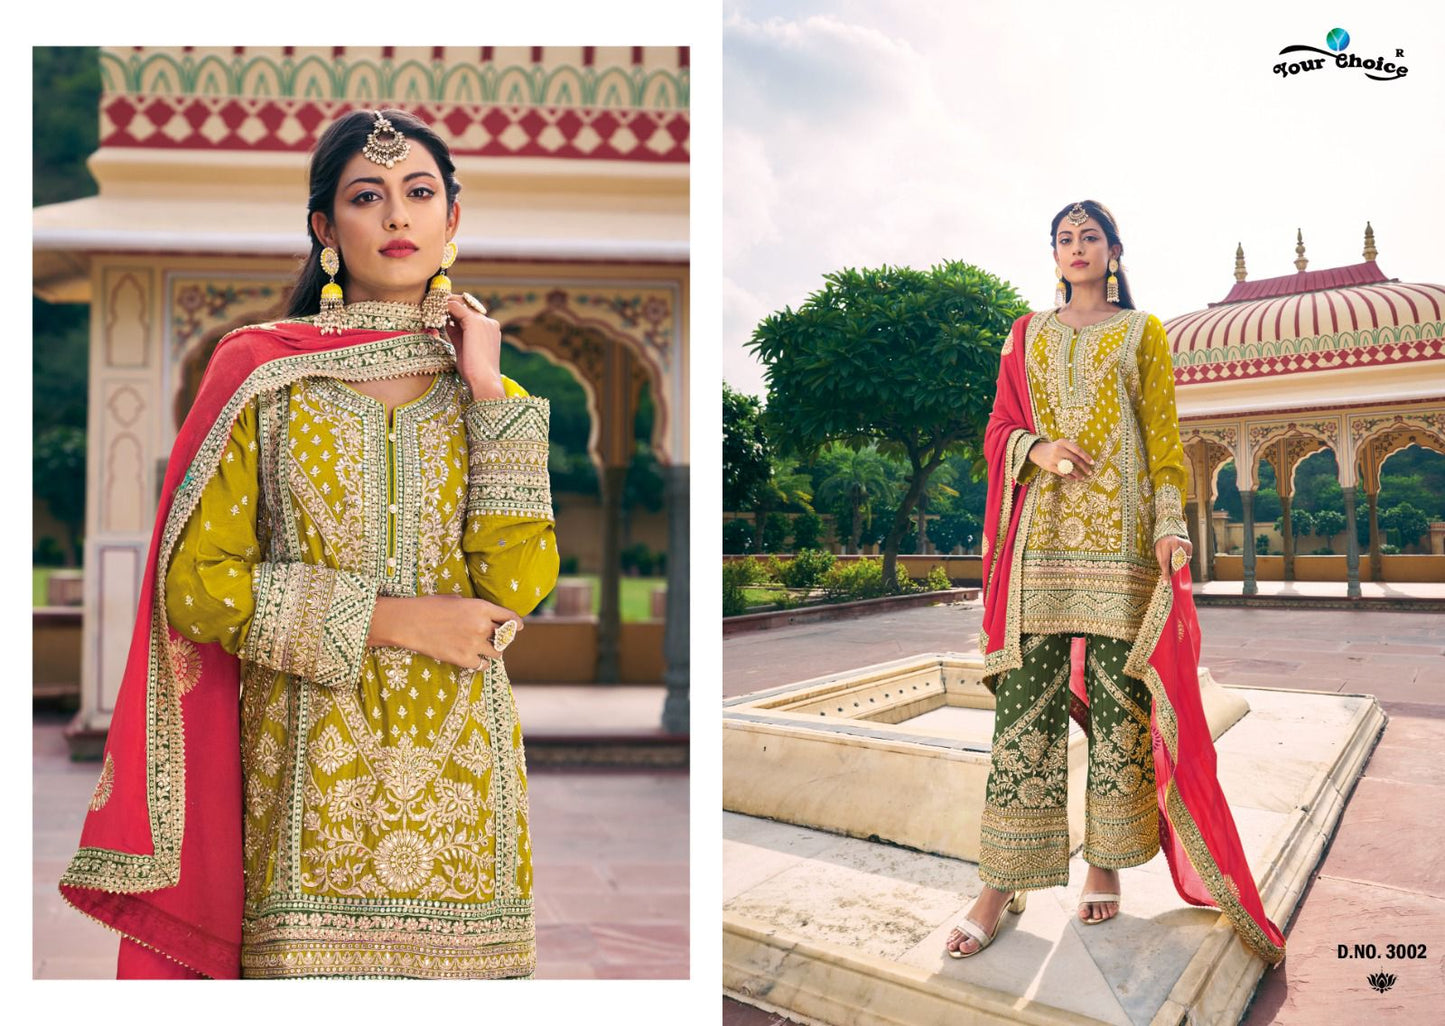 Avani Your Choice Chinon Pakistani Readymade Suits